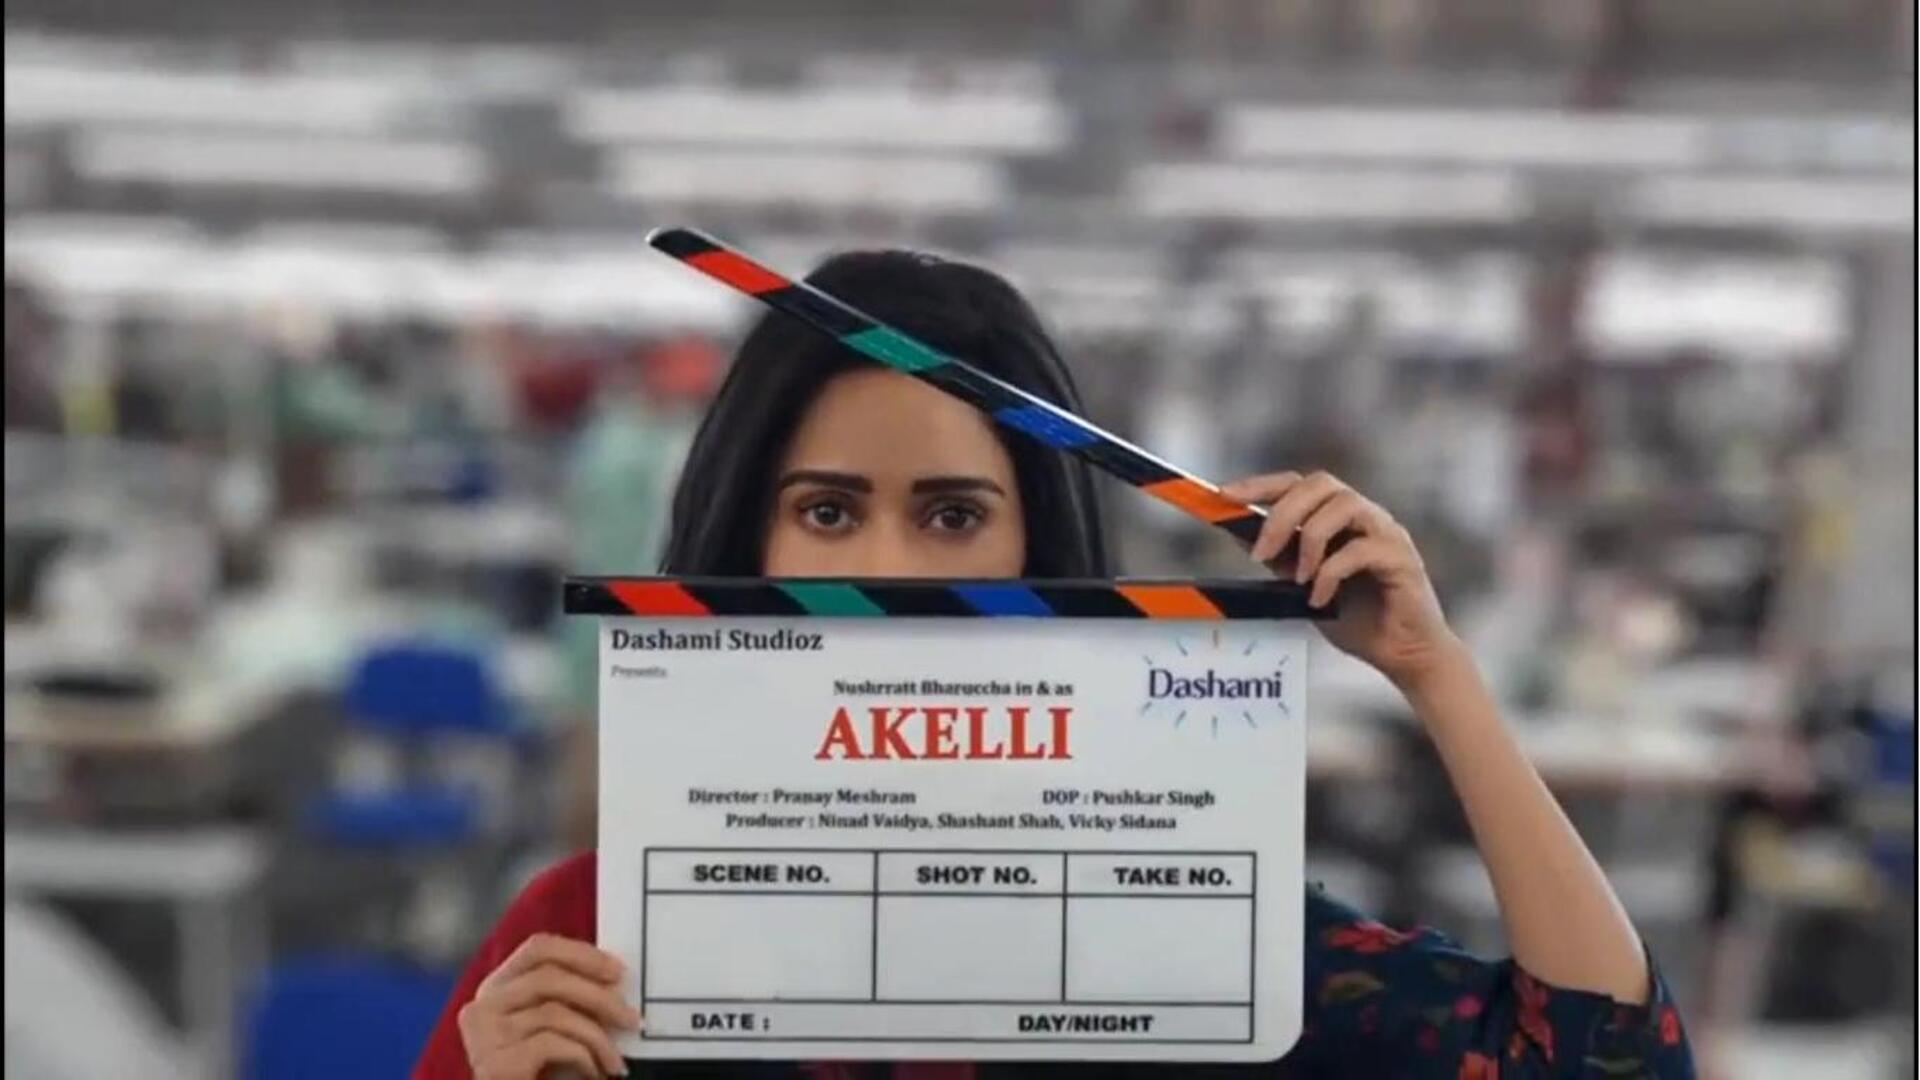 #BoxOfficeCollection: Nushrratt Bharuccha's 'Akelli' makes less than Rs. 1cr